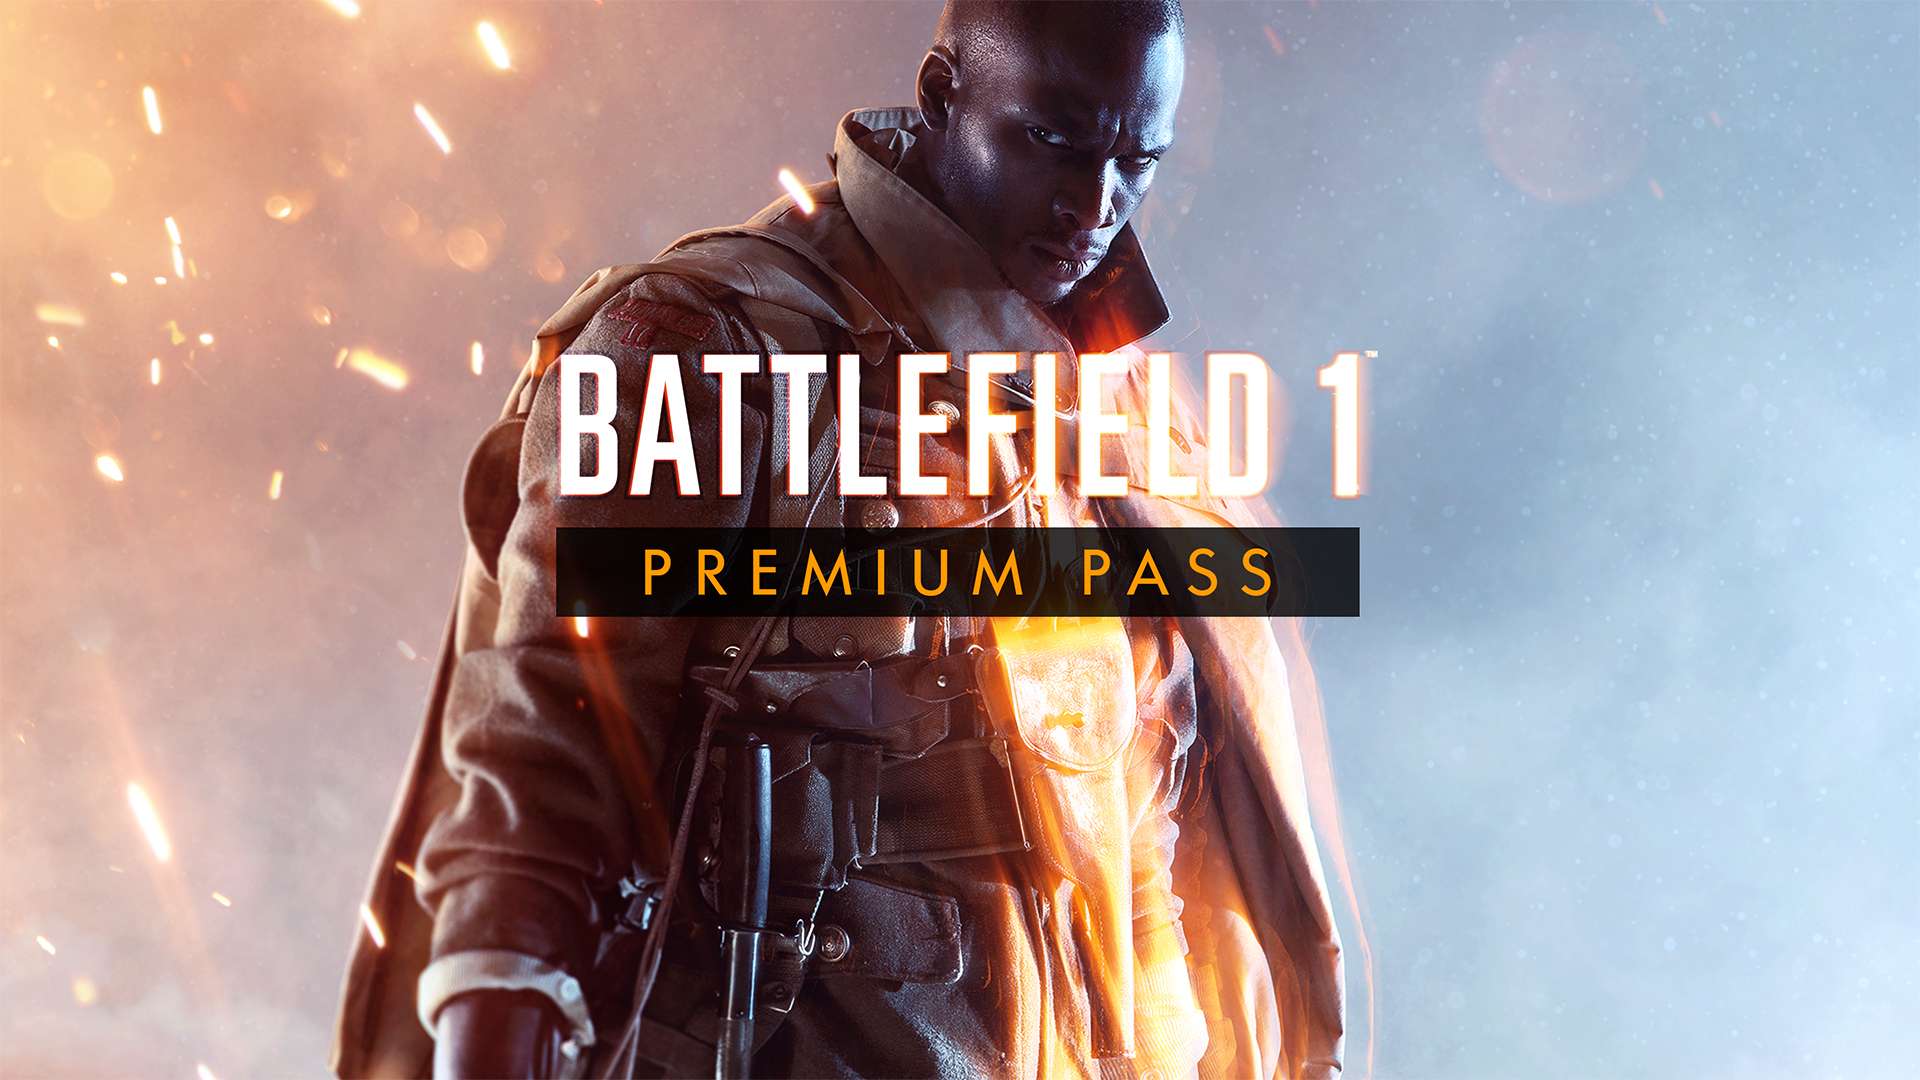 Battlefield 1 a mikrotransakcje / Premium Pass